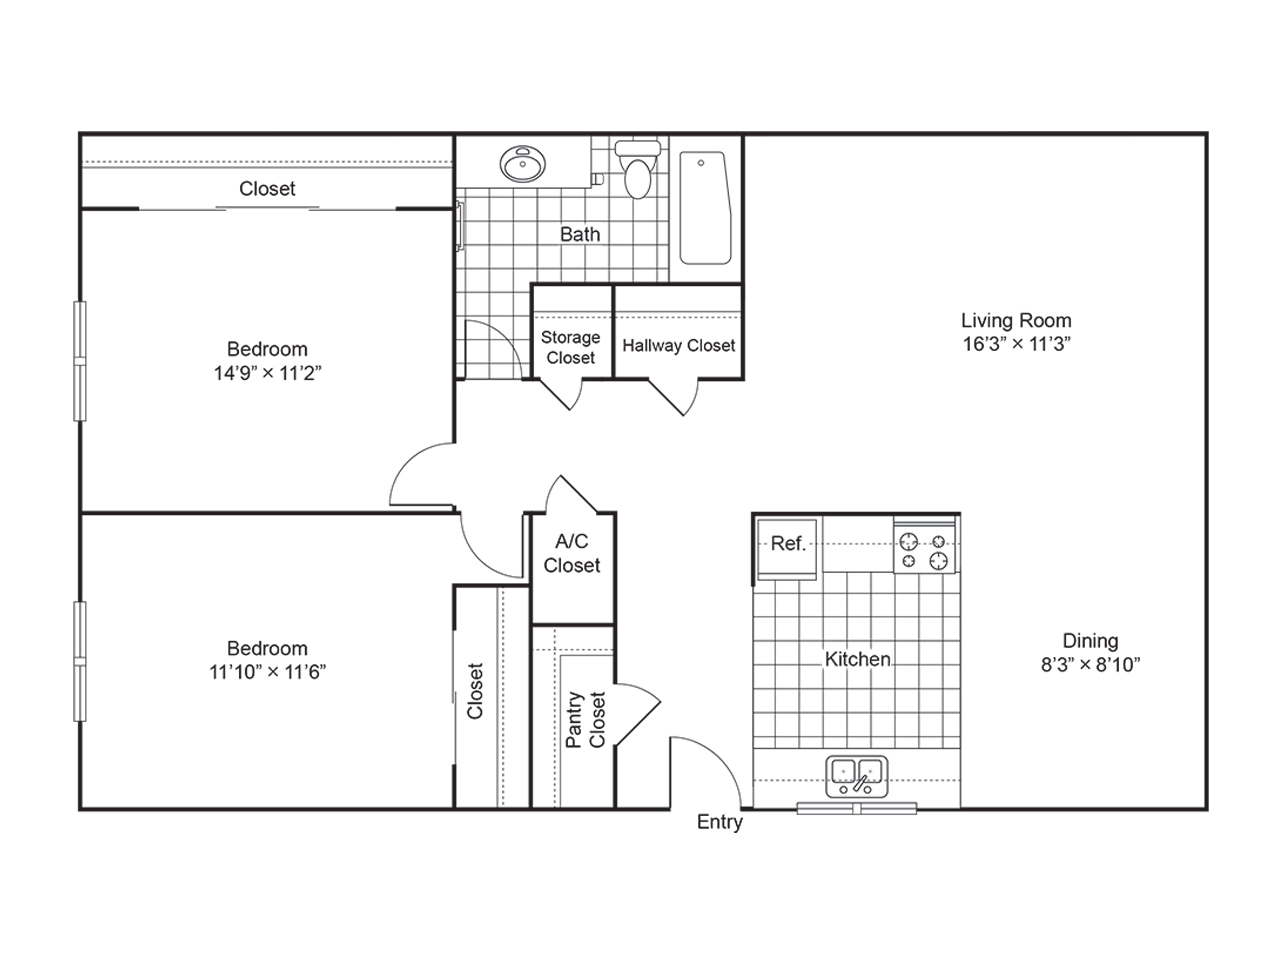 2 bedroom 1 bath apartment floorplan